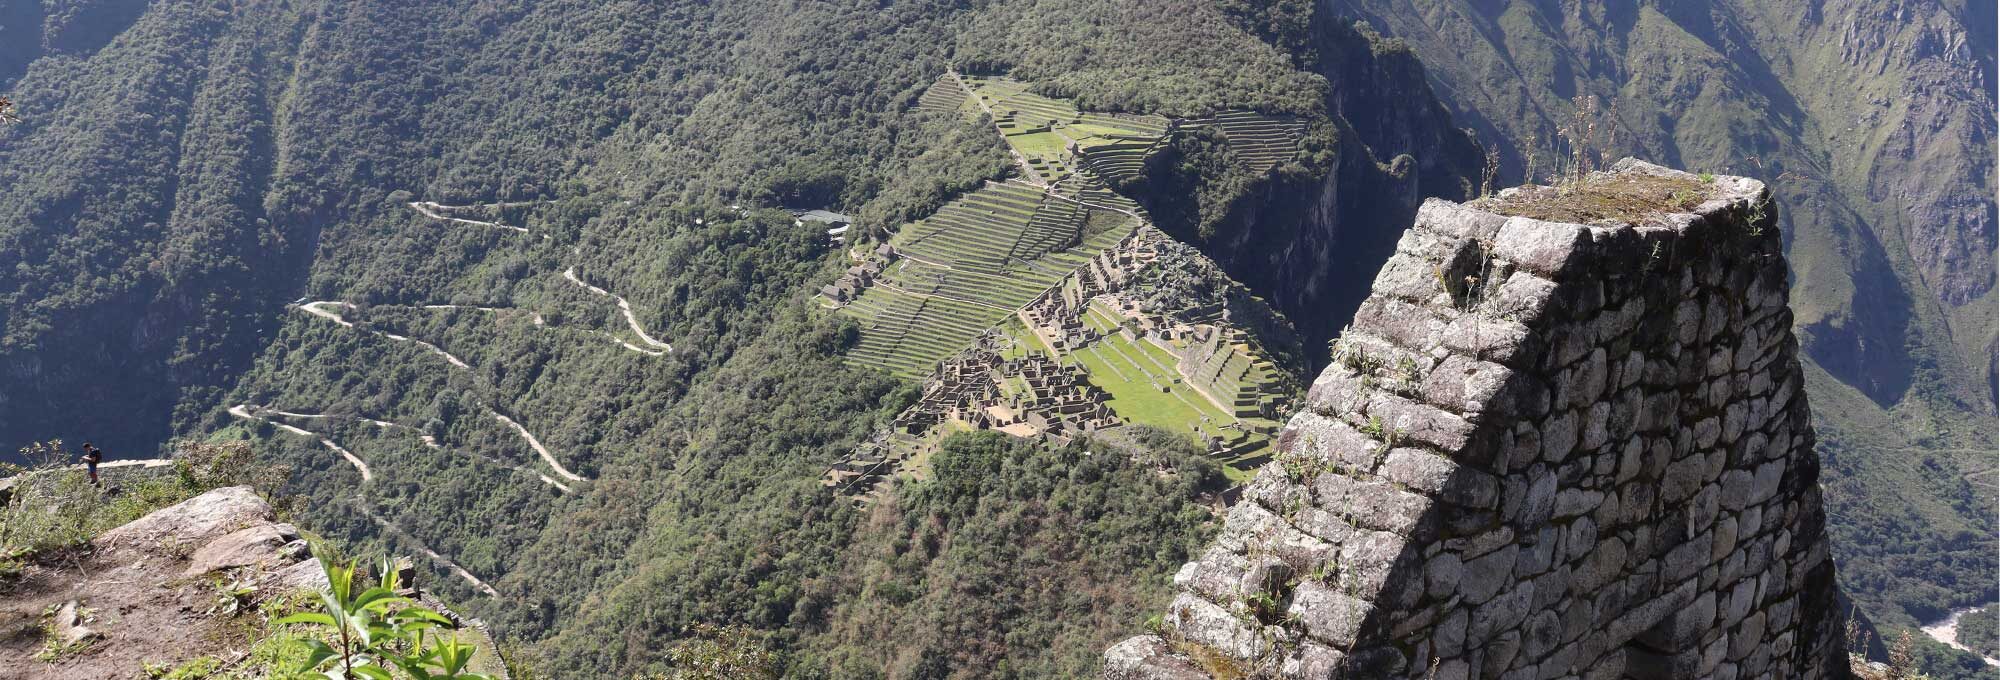 Machu Picchu Tour 1 Day by train